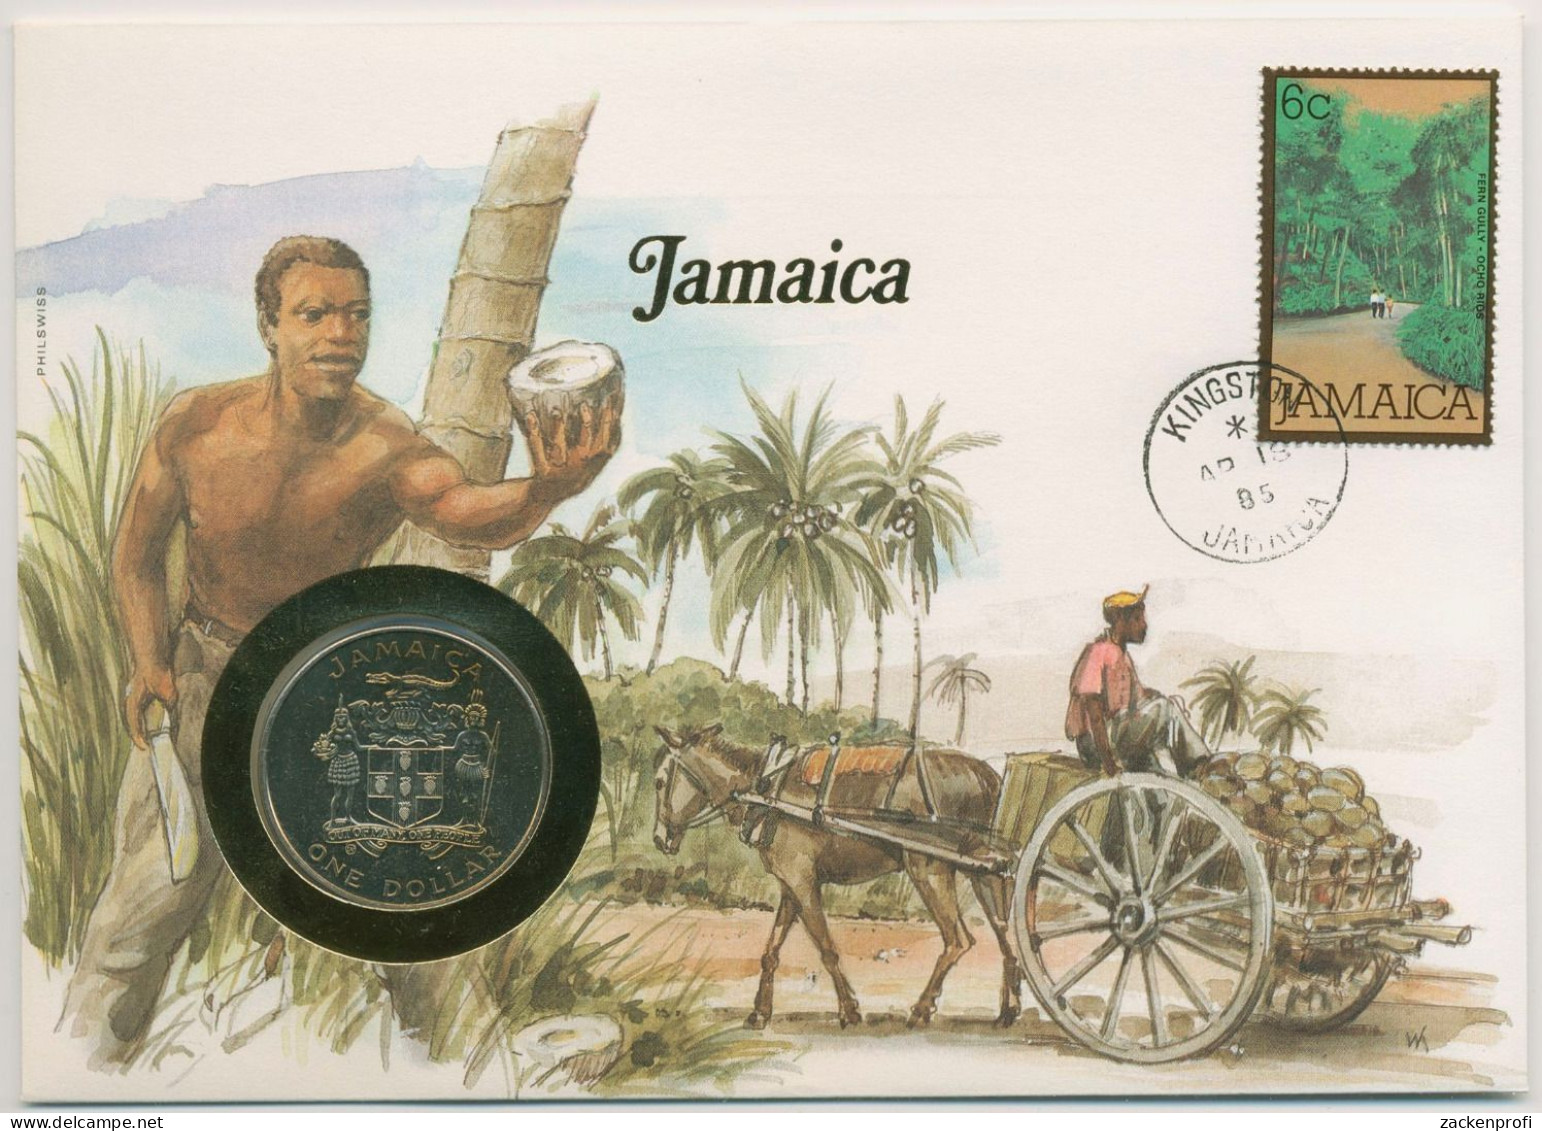 Jamaika 1985 Kokosnussernte Numisbrief 1 Dollar (N467) - Jamaique